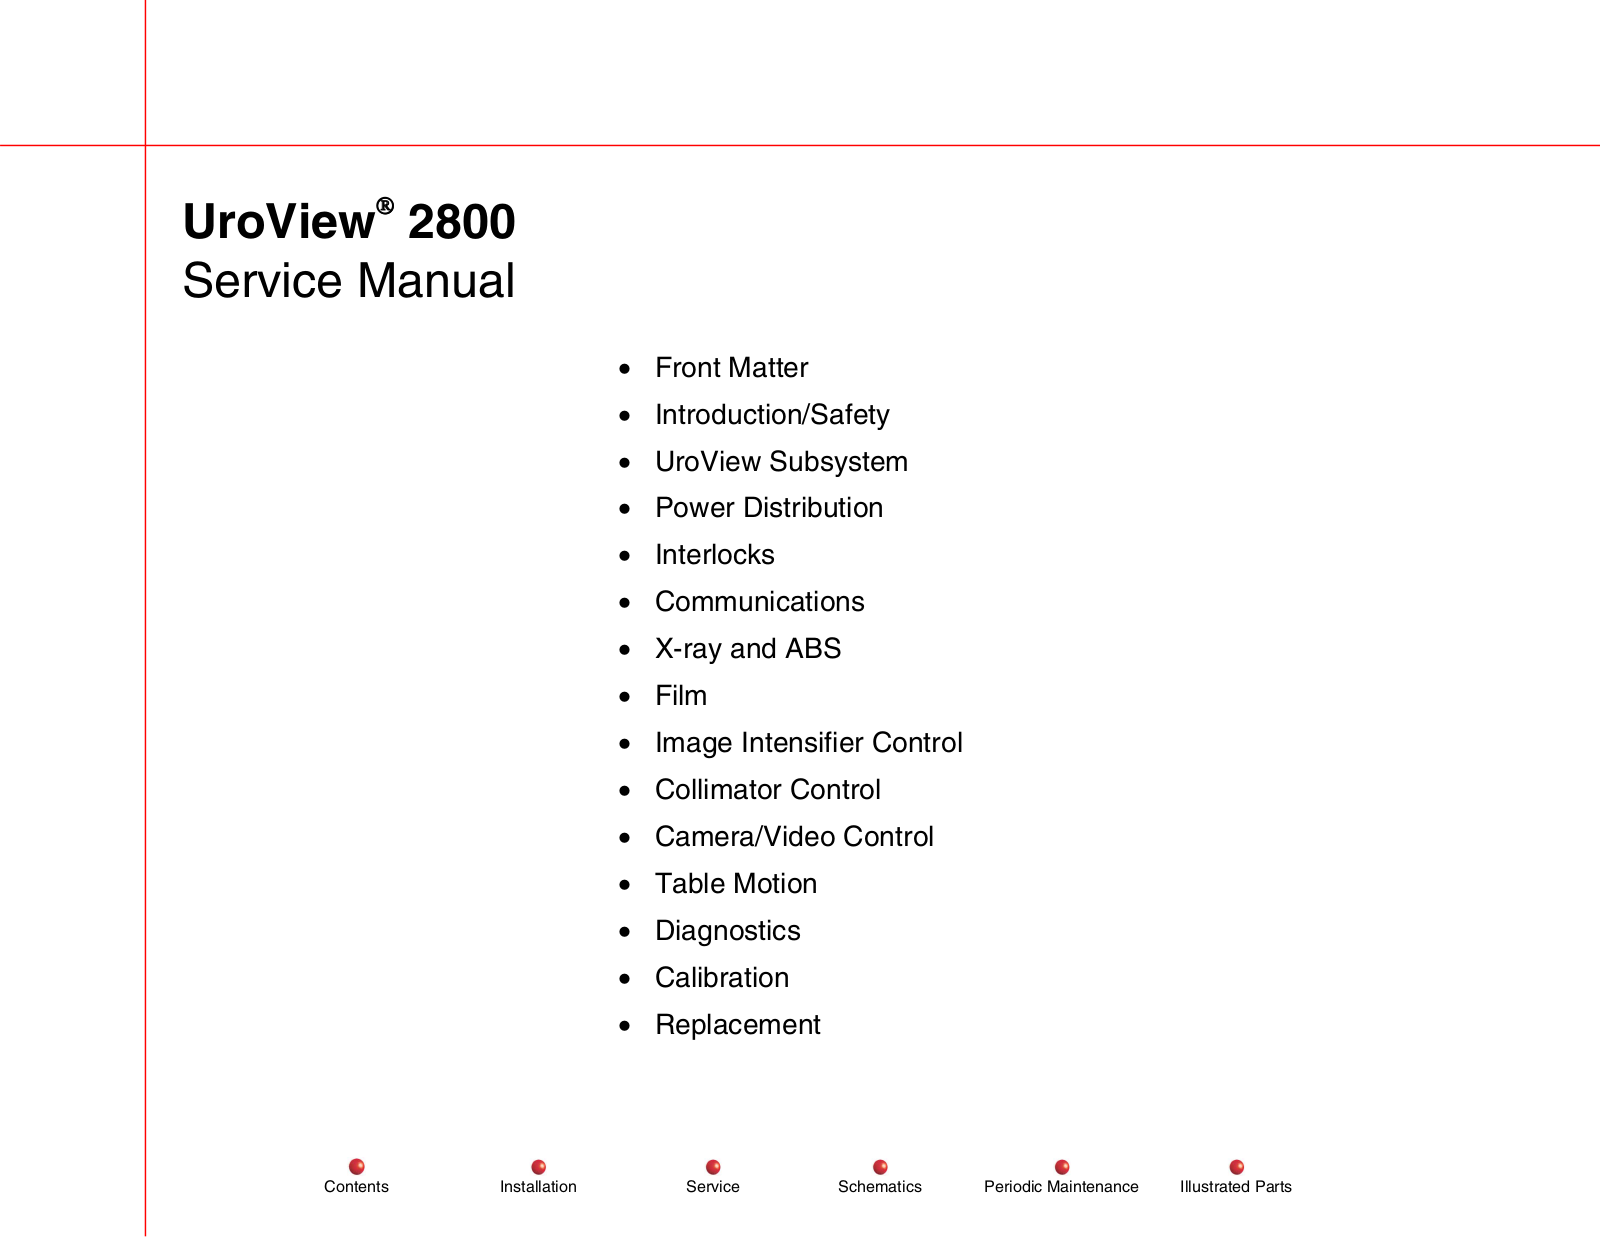 GE OEC UroView 2800 Service manual